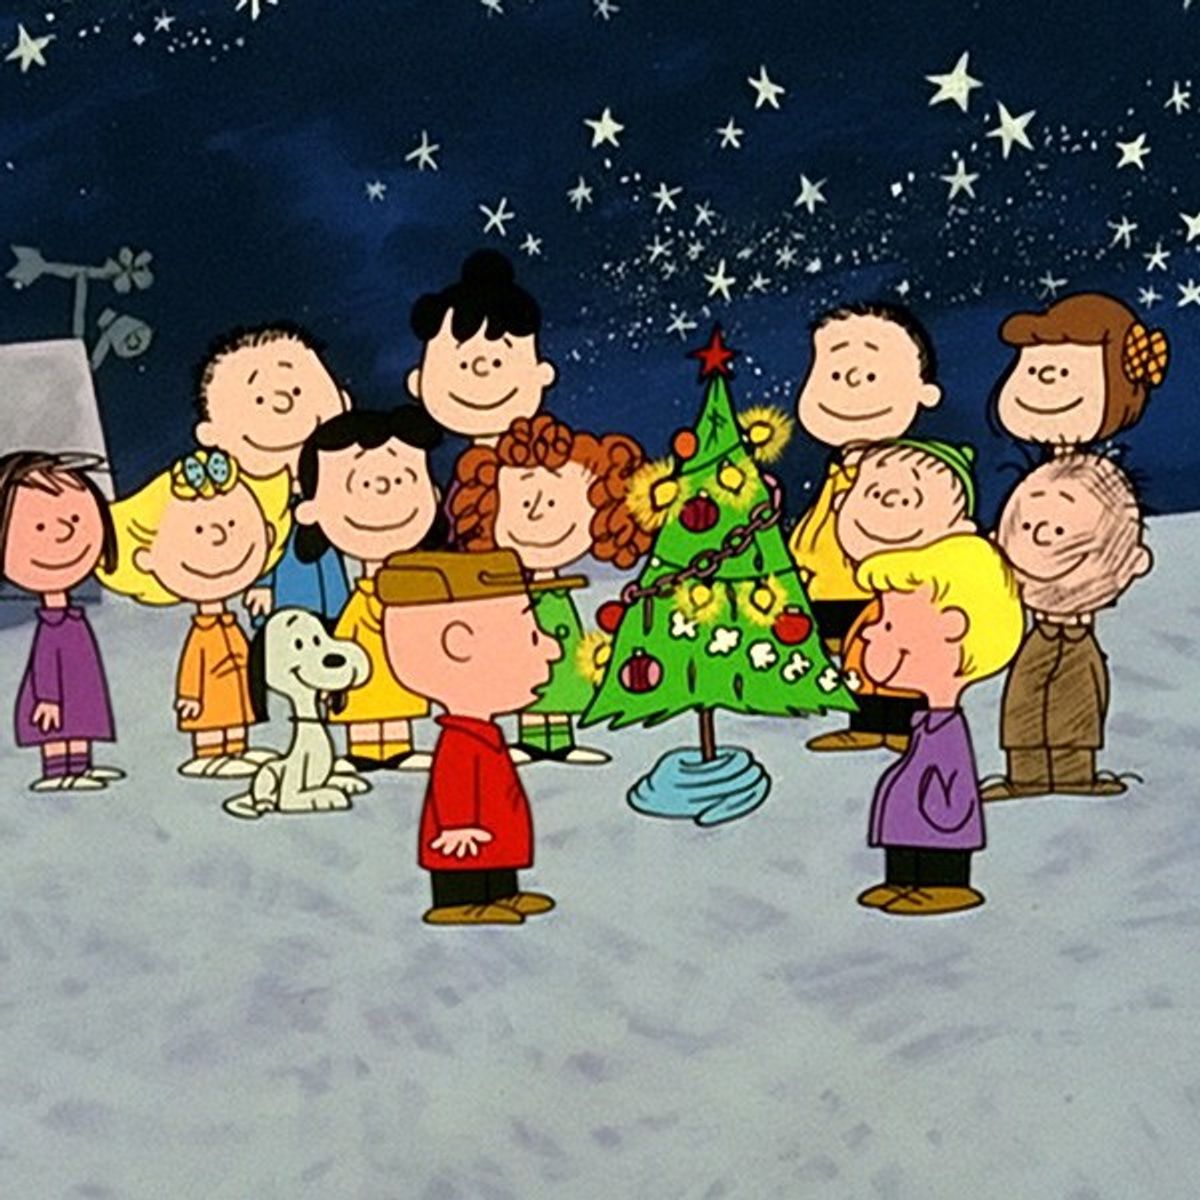 11 Little Ways to Spread Joy this Holiday Season